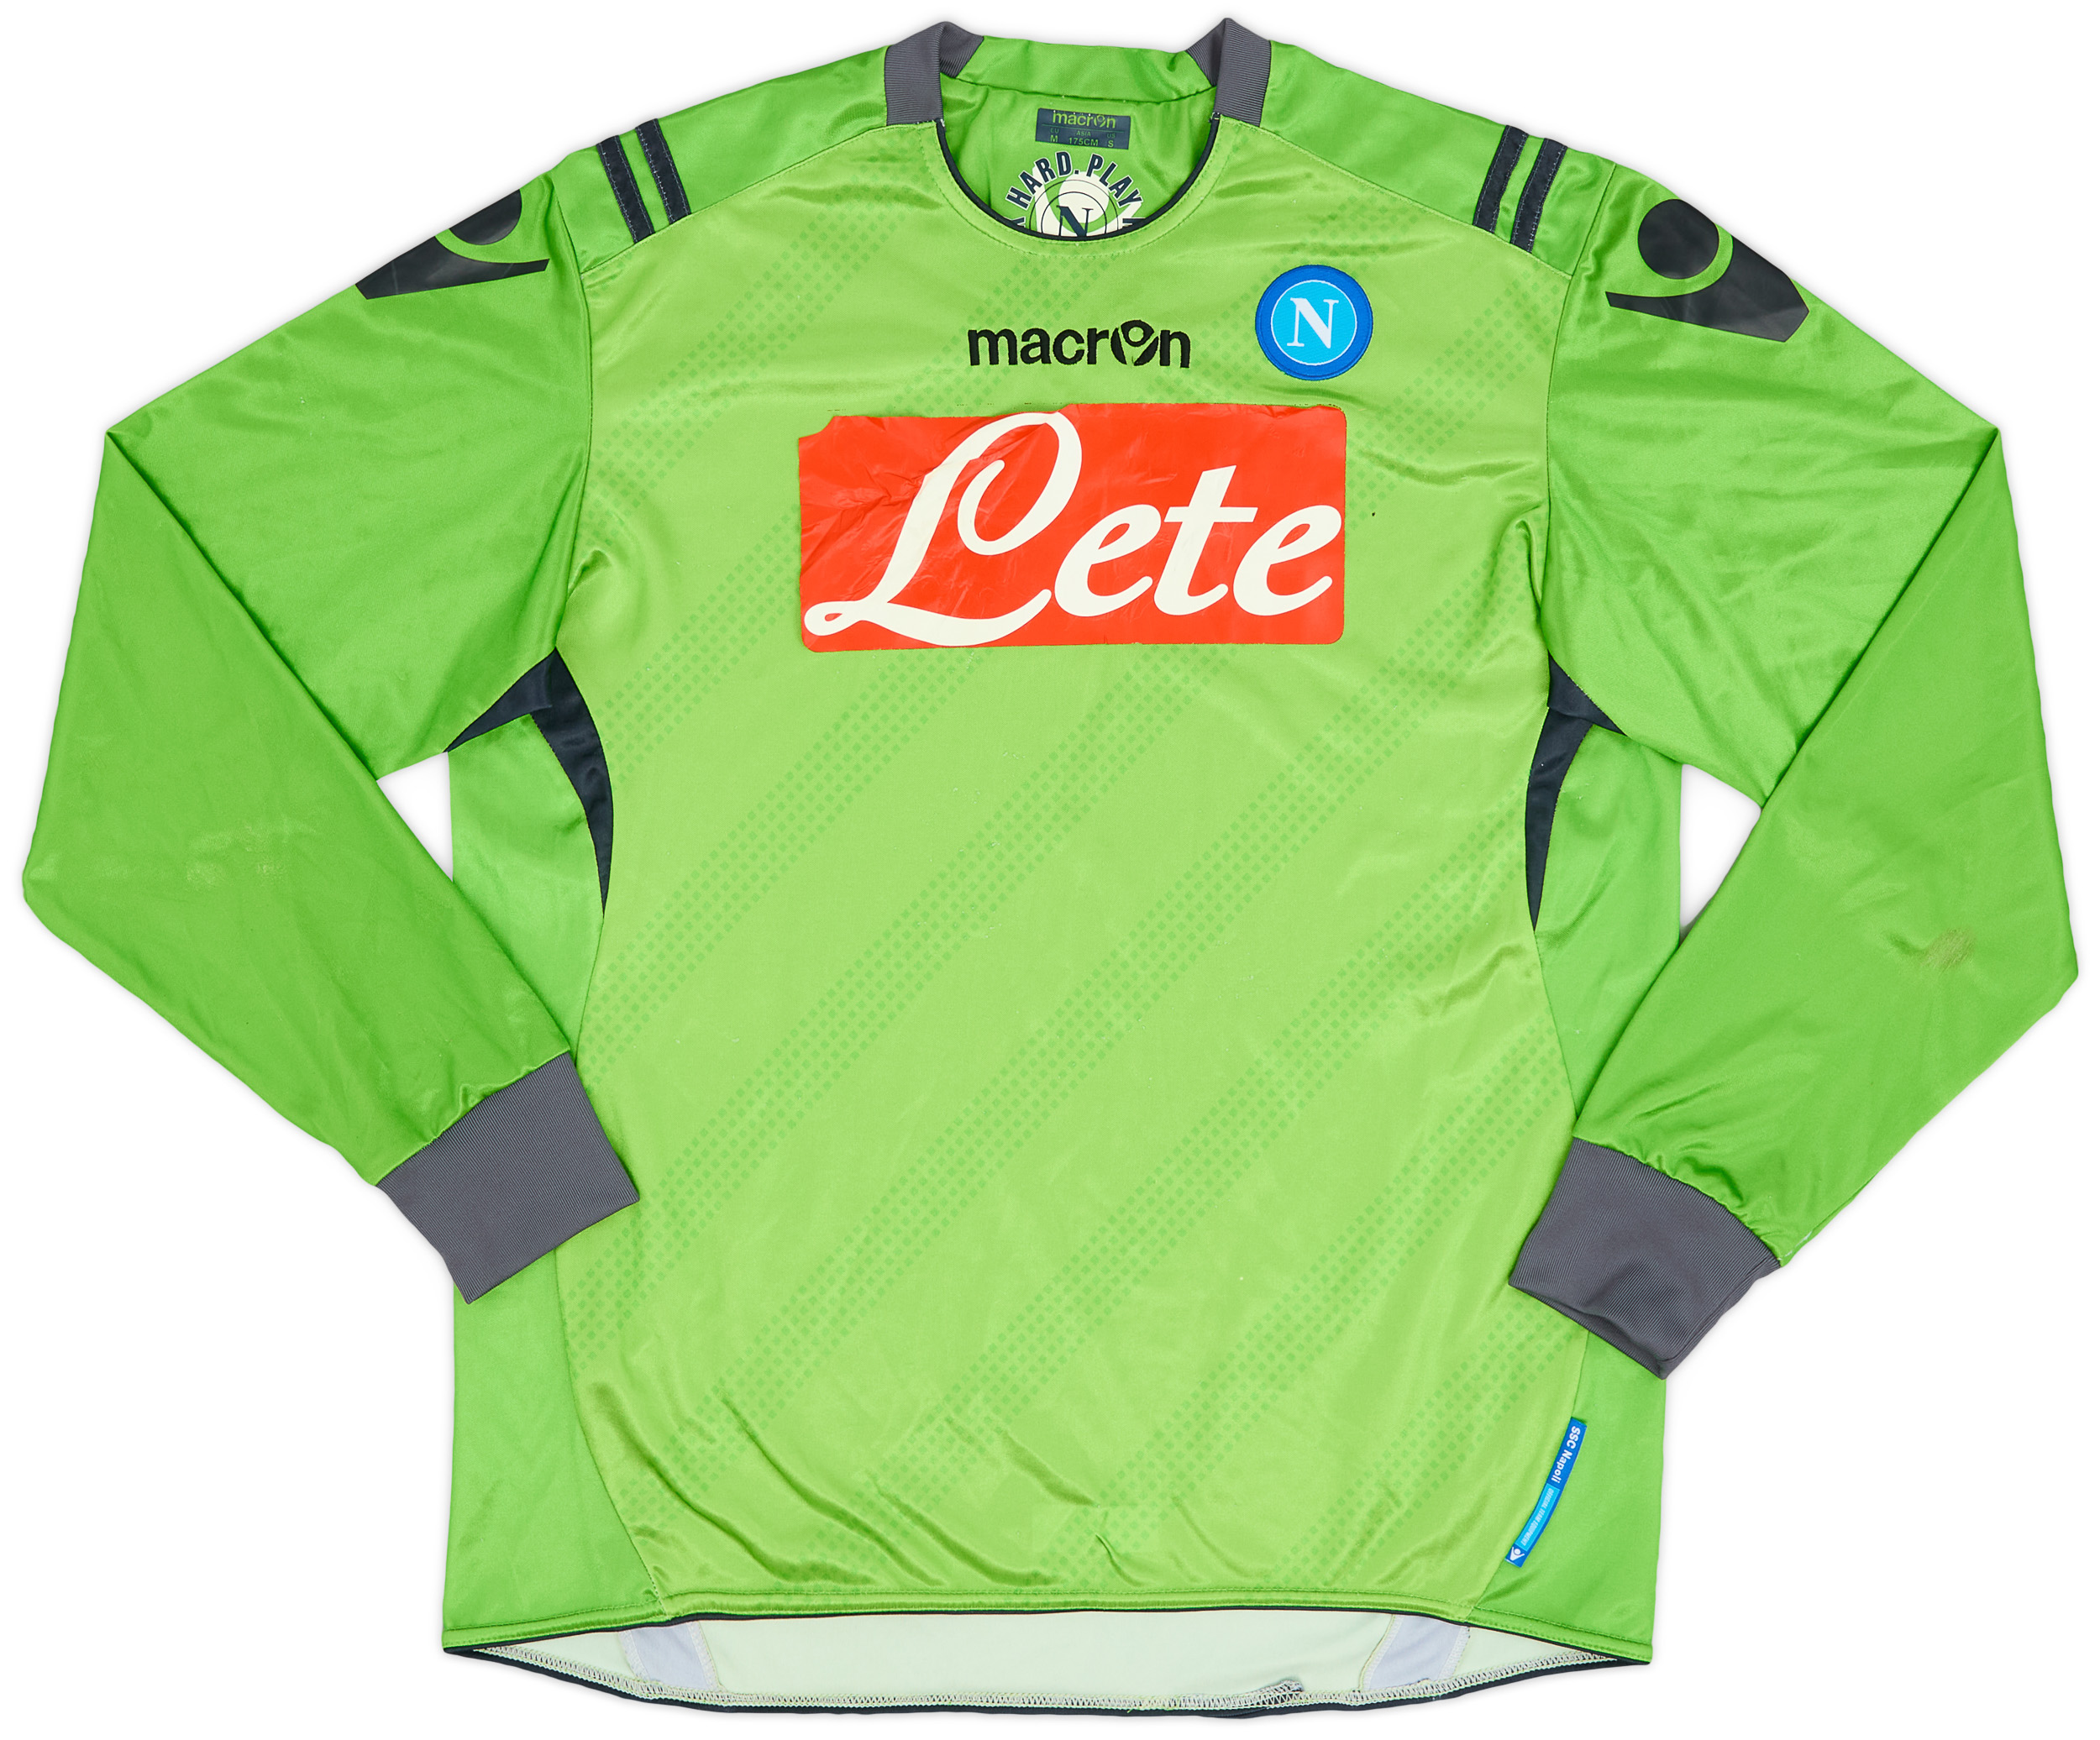 Napoli  Goalkeeper shirt (Original)